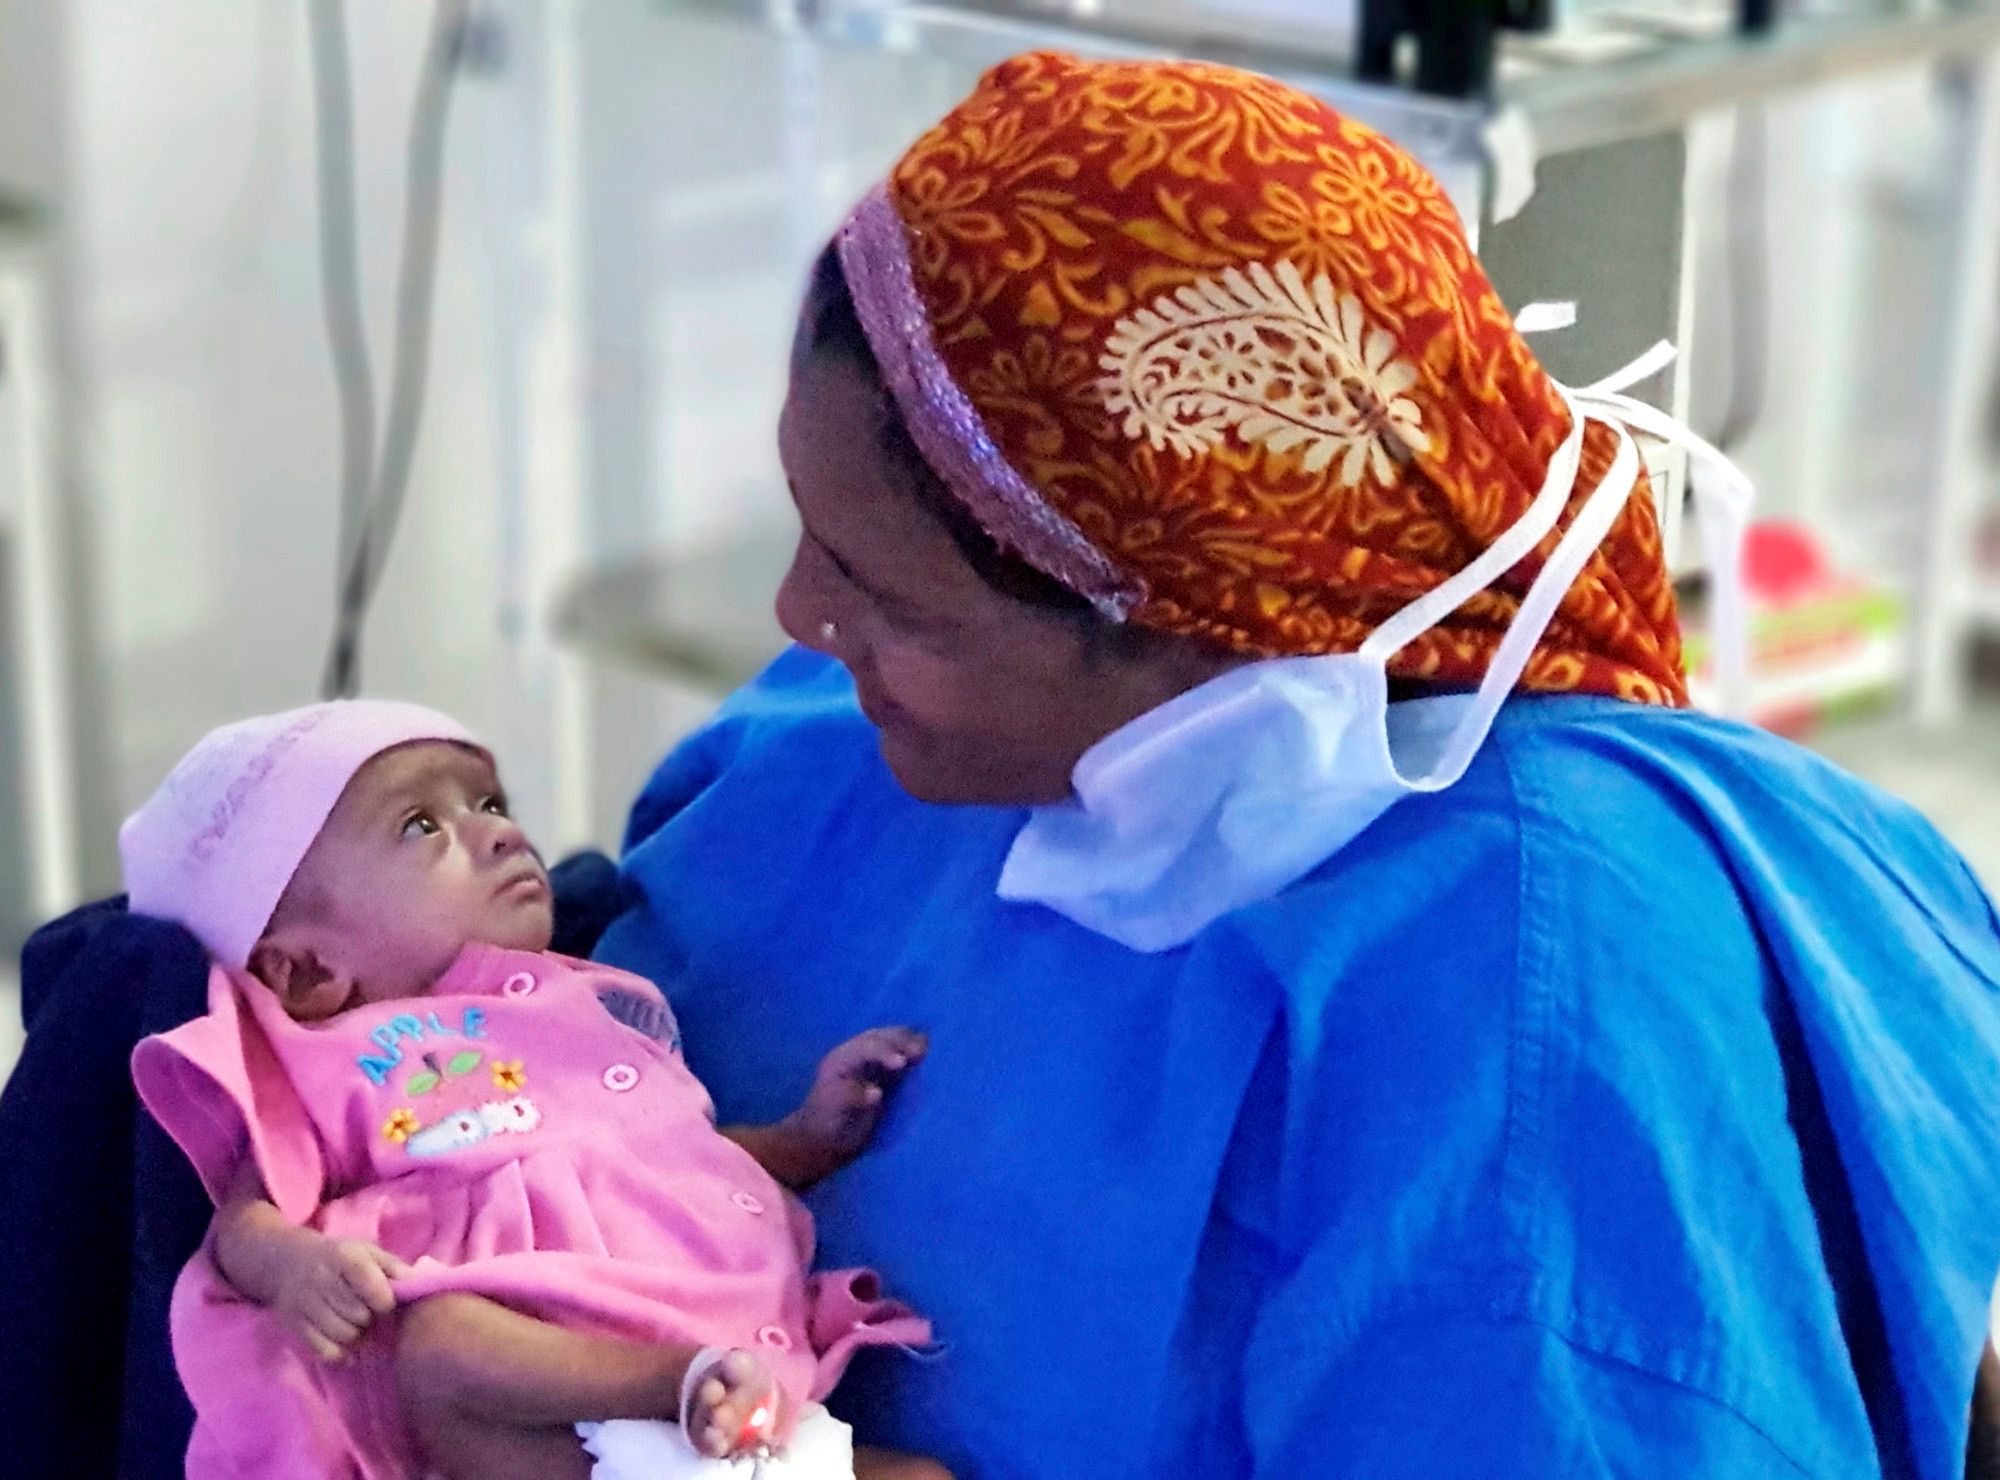 Cuma Punya Peluang 0,5 Persen untuk Bertahan Hidup, Ini Video Kisah Mengharukan dari Bayi Prematur Terkecil di Dunia